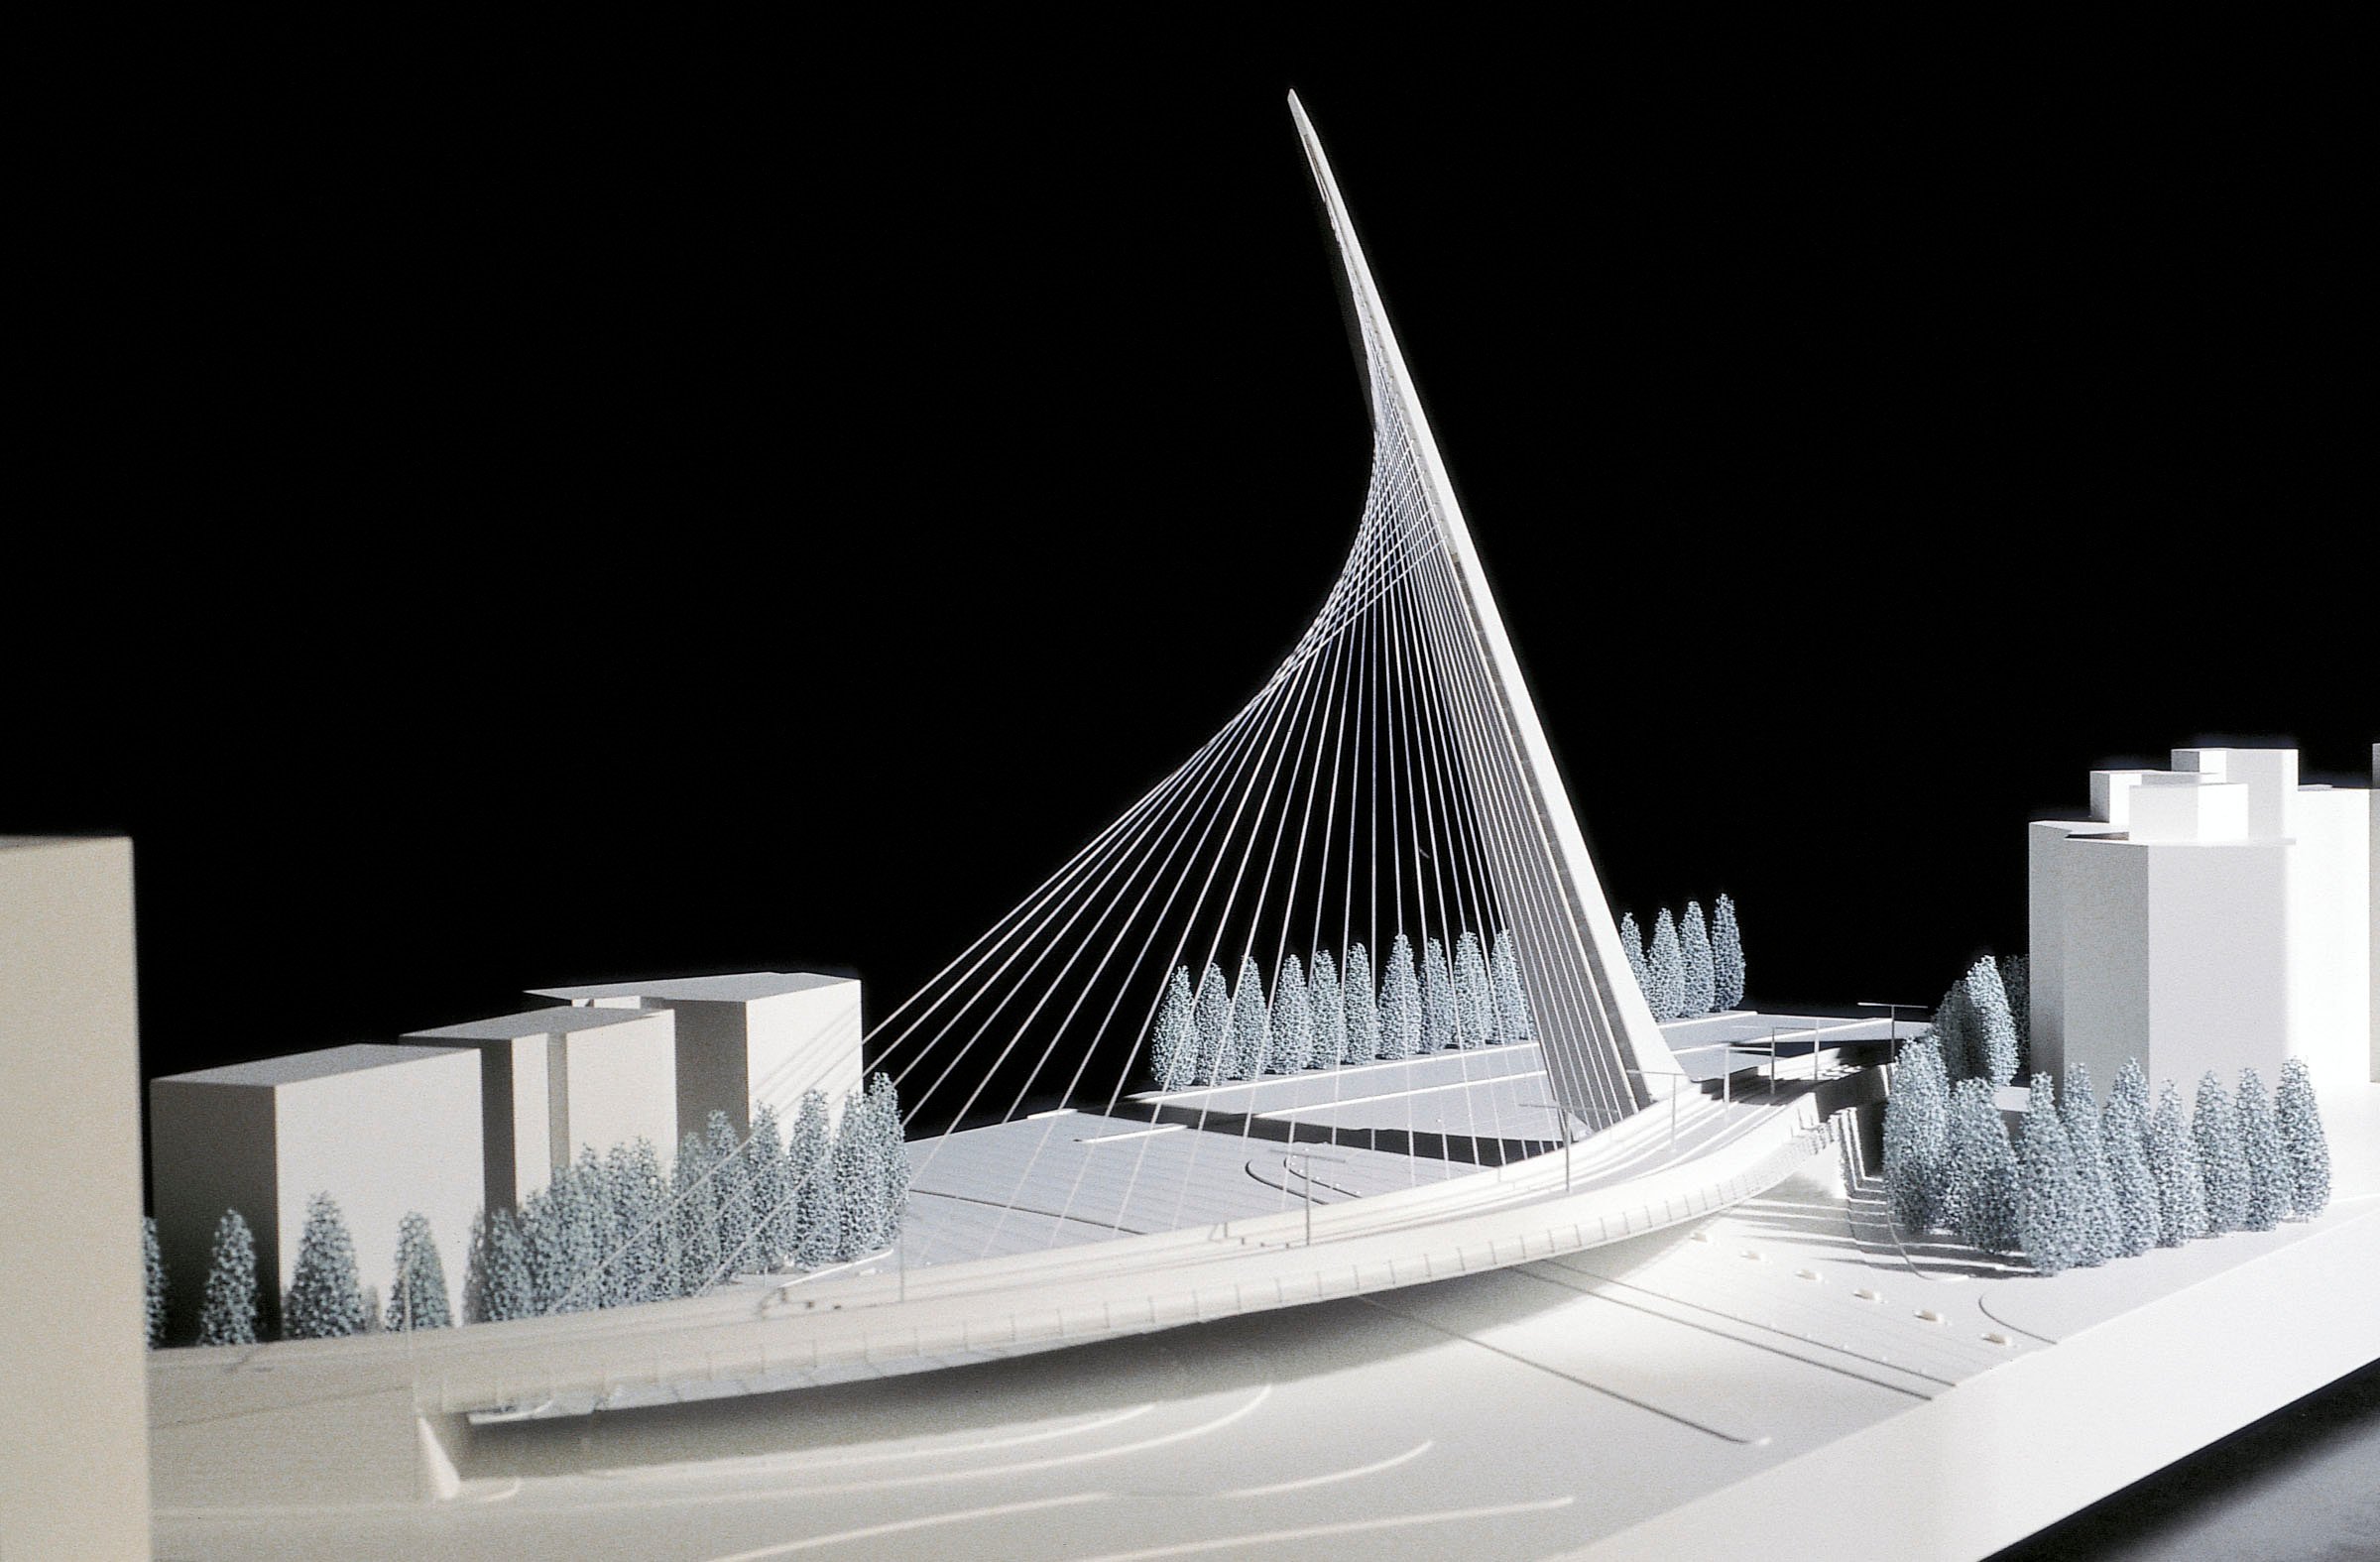 Santiago Calatrava – Le metamorfosi dello spazio